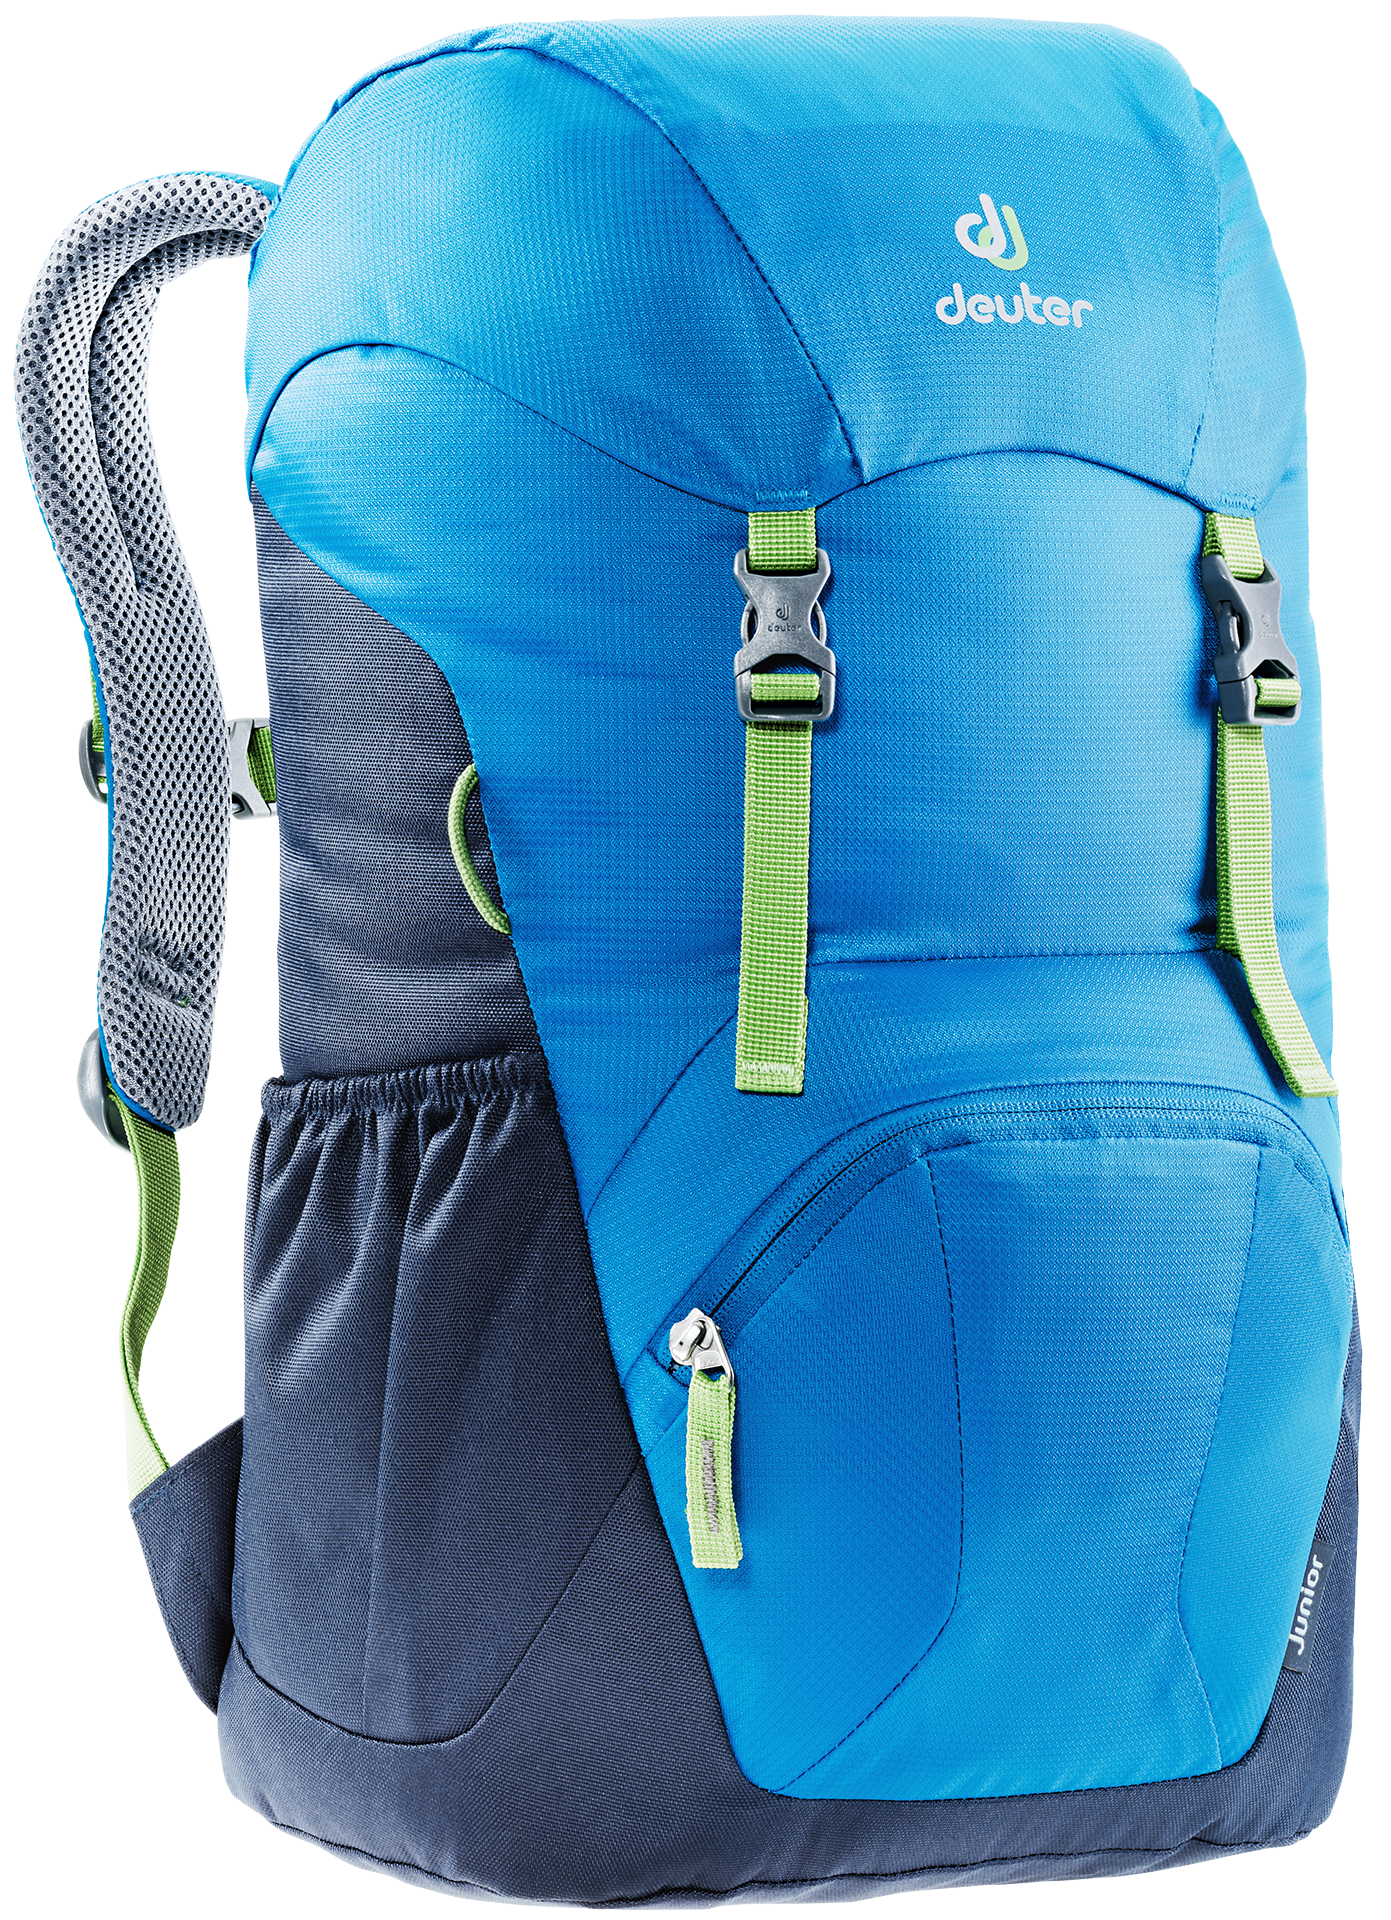 Deuter - Junior Backpack